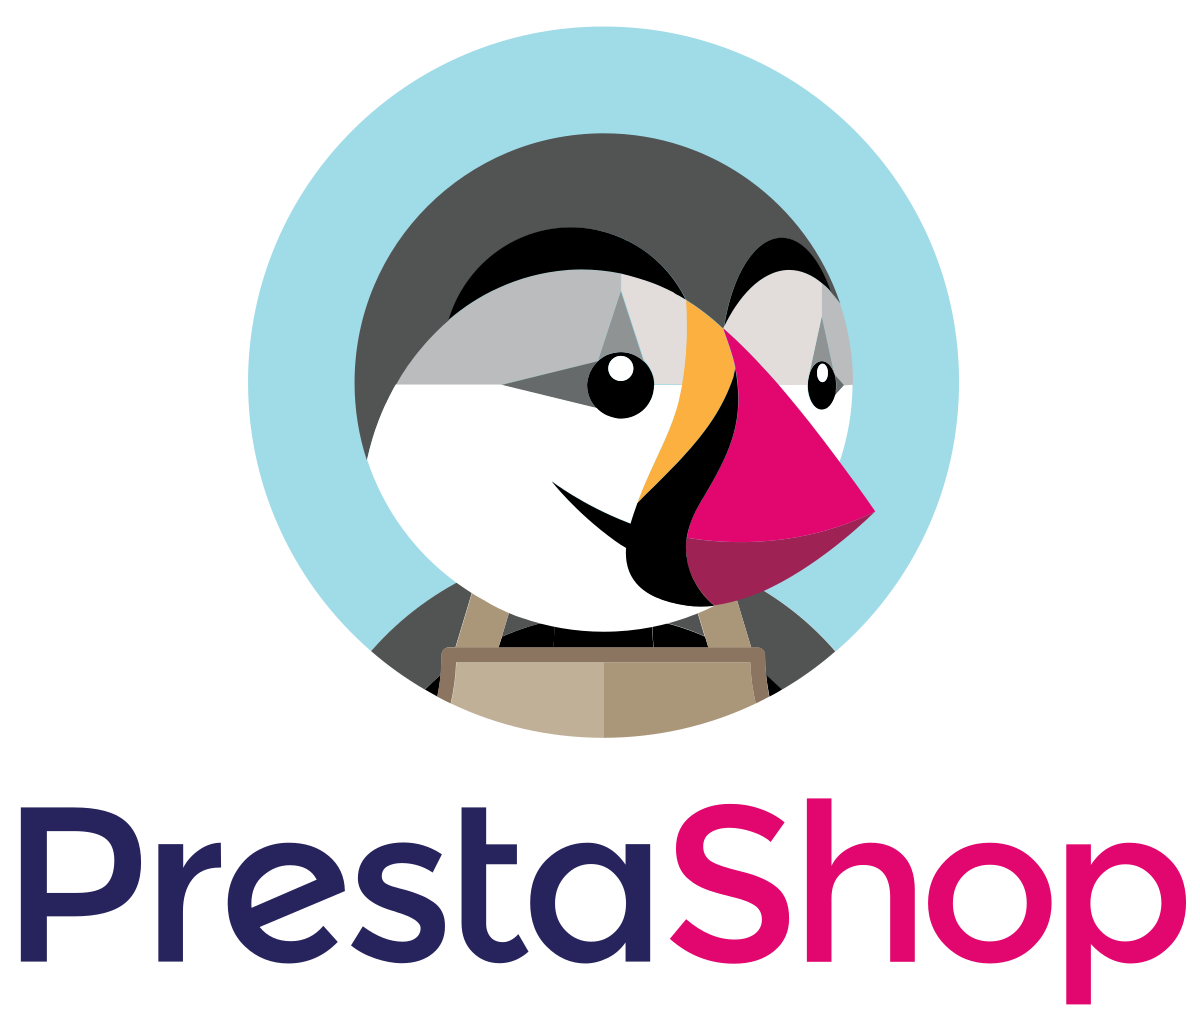 PrestaShop - Wikipedia